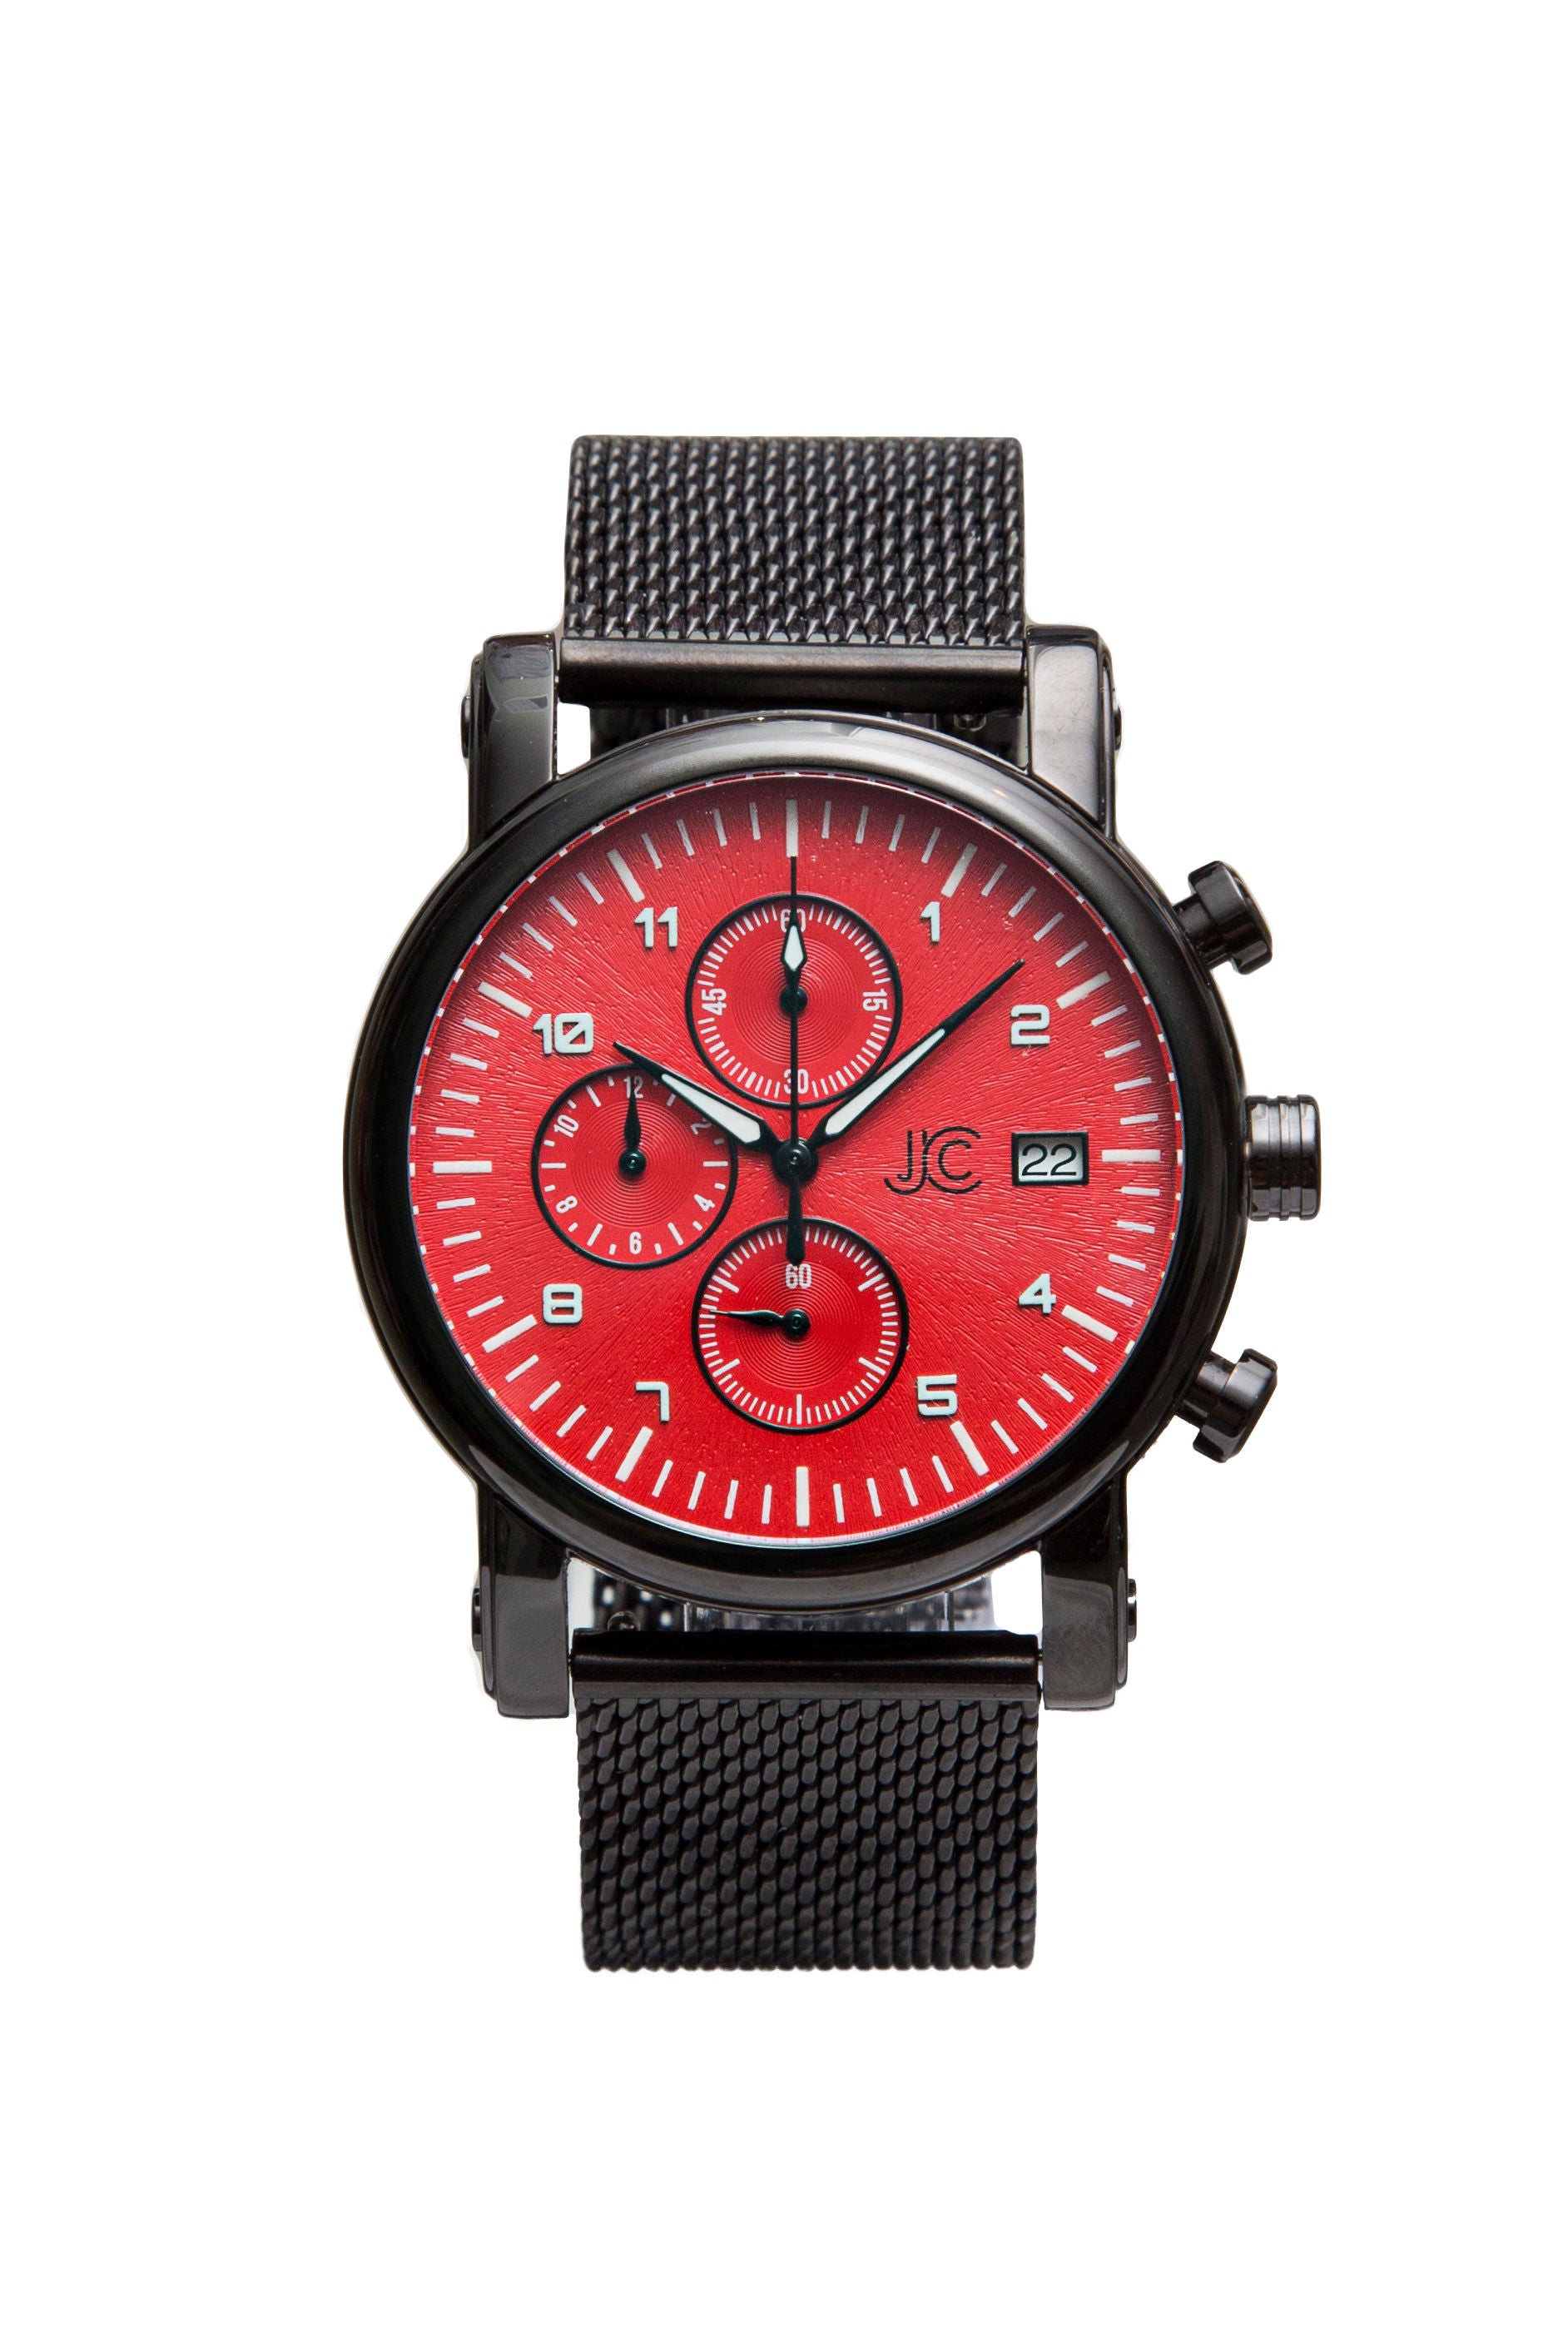 J.Ciro S3 Red Dial Chronograph Watch